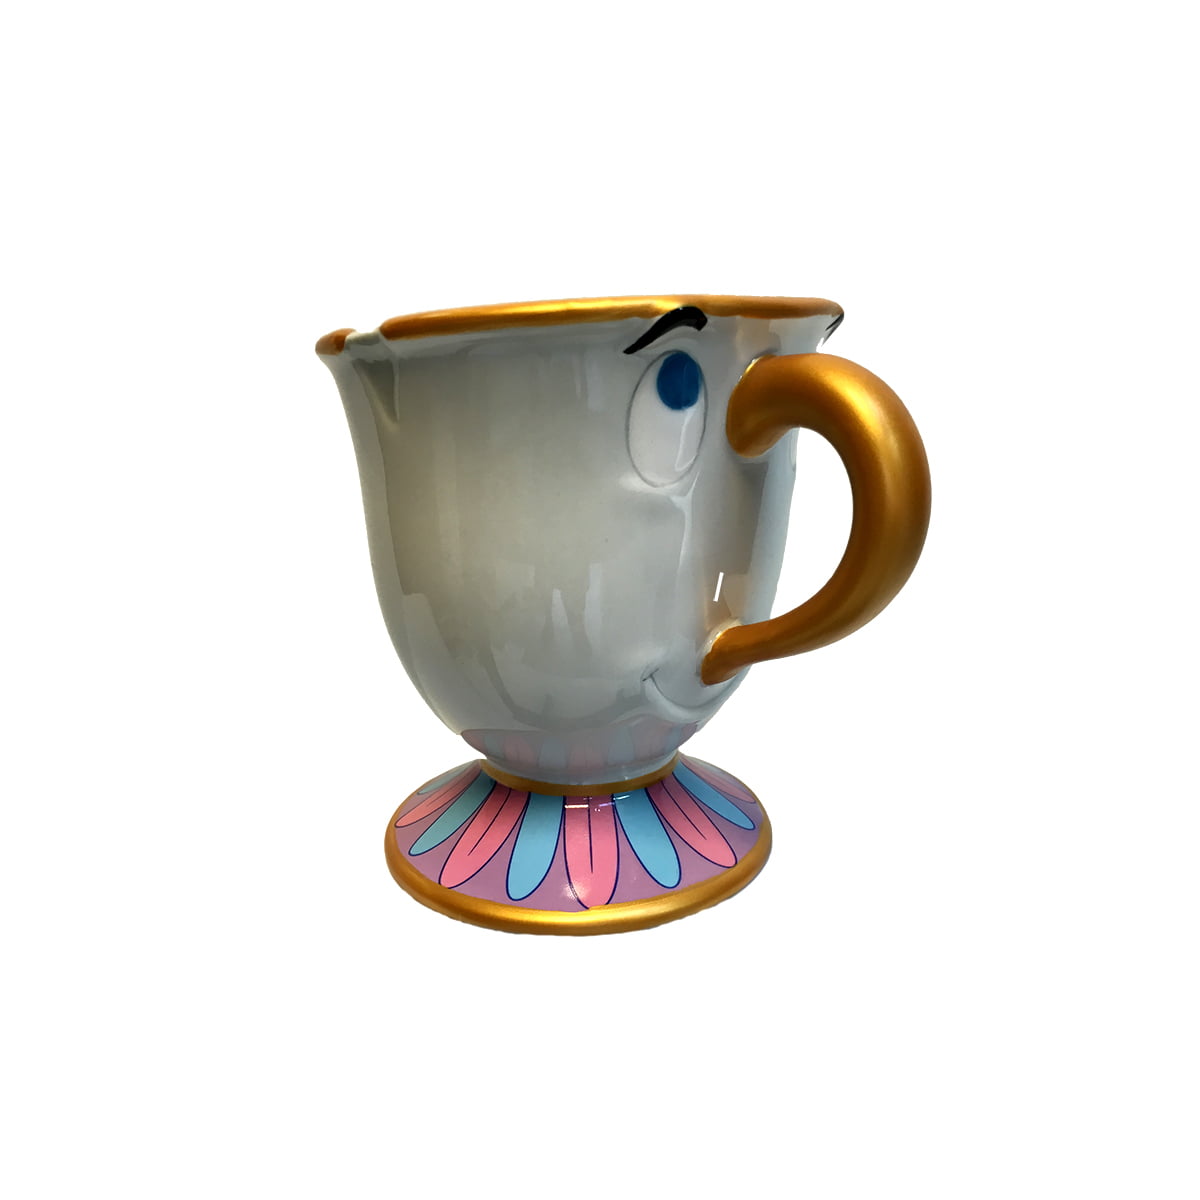 Disney Beauty and the Beast Chip Coffee Cup Mug